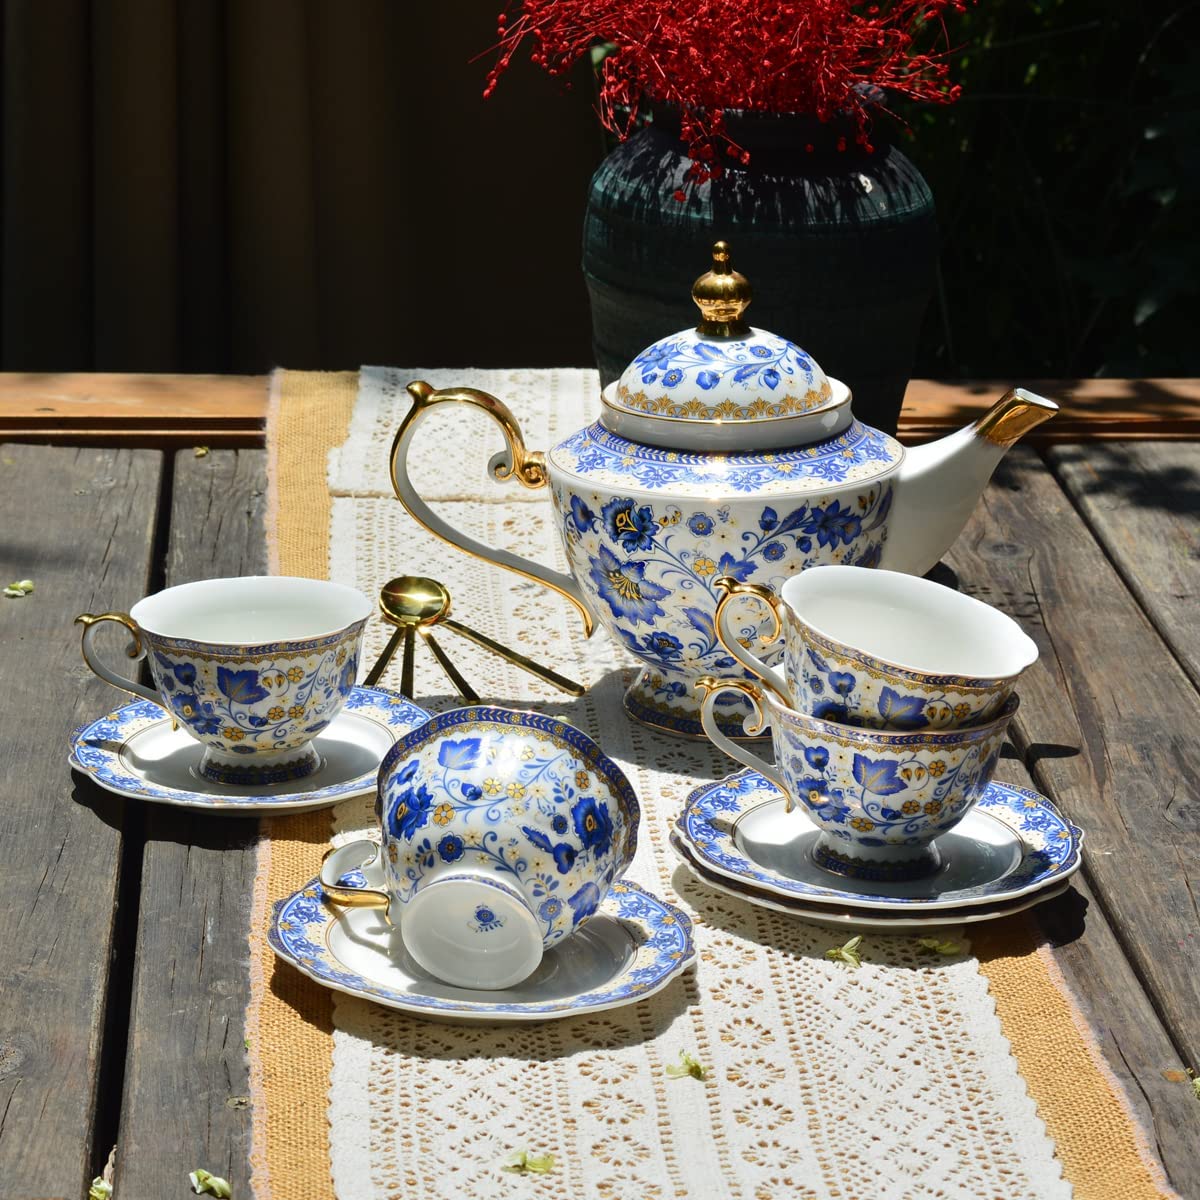 21 Piece Vintage Porcelain Tea Set, Tea cups, Tea Pot, Creamer and